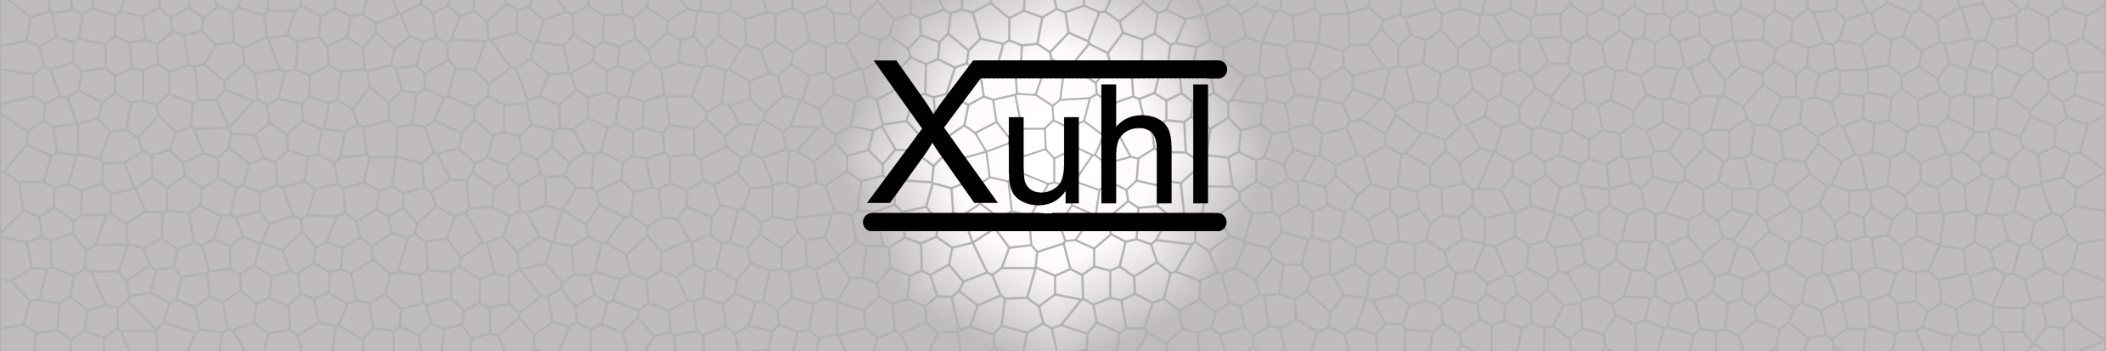 Xuhl